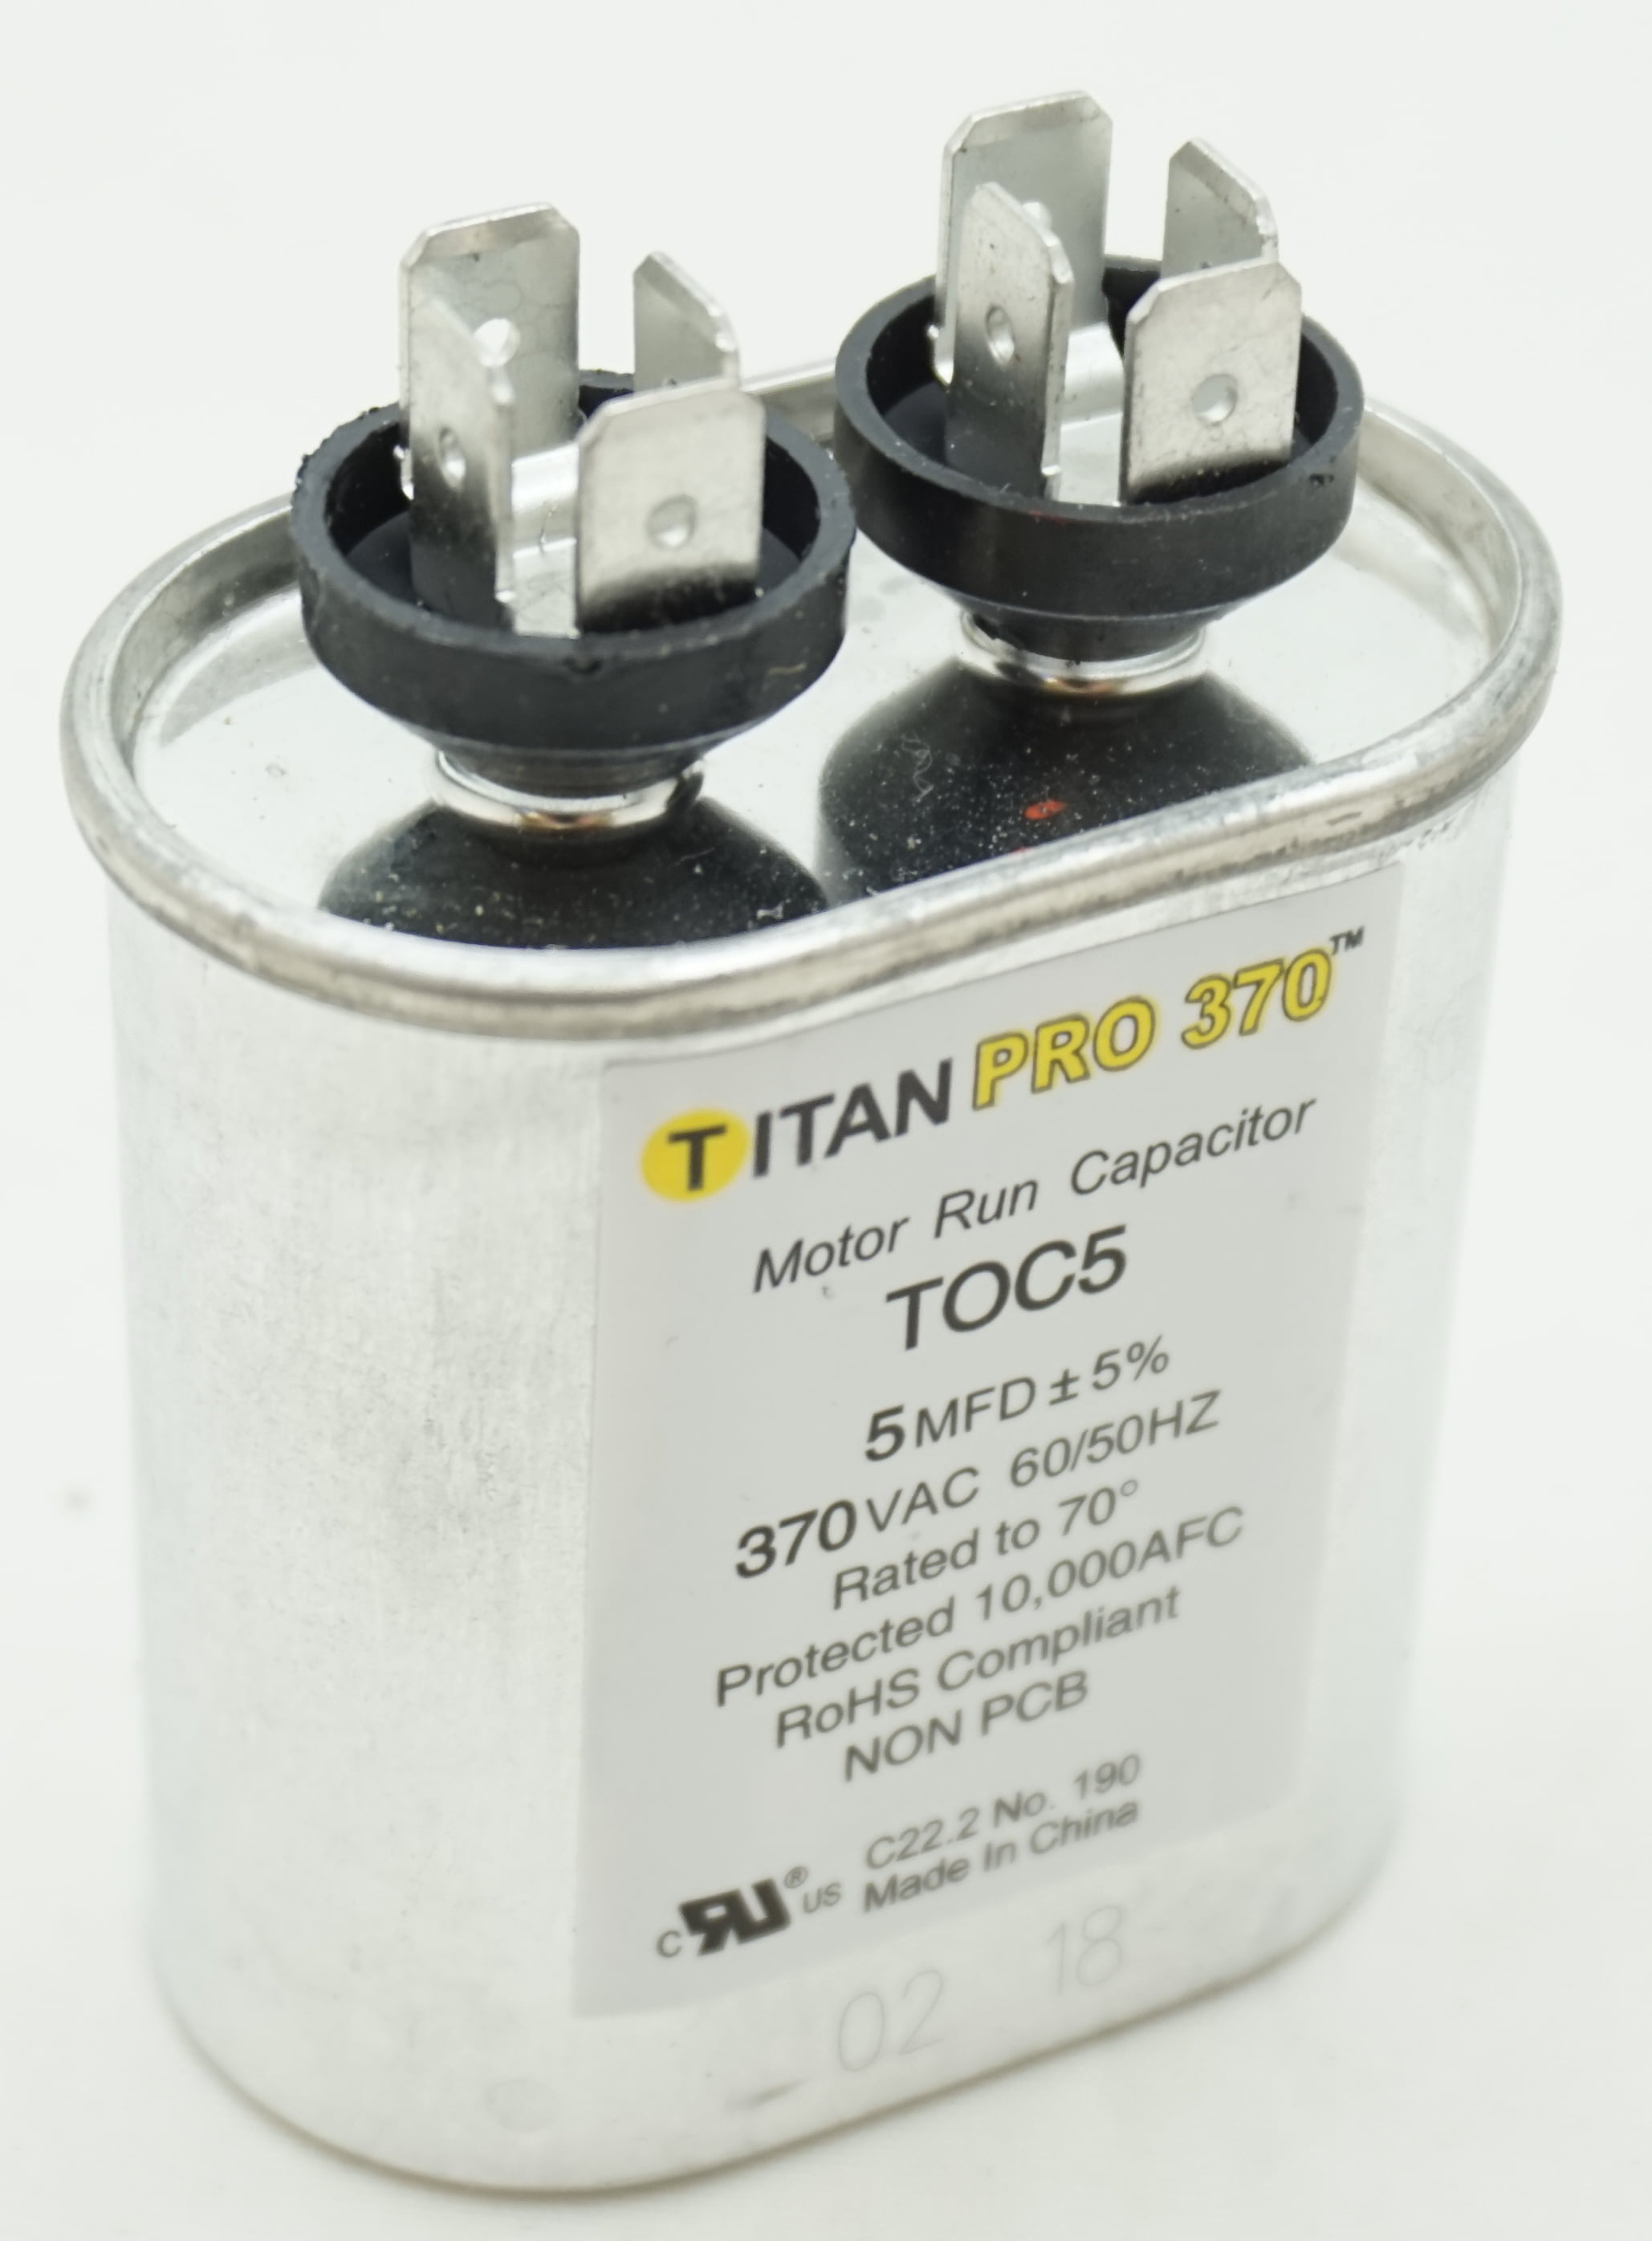 Titan Pro 370 Motor Run Capacitor TOC5 5MFD 